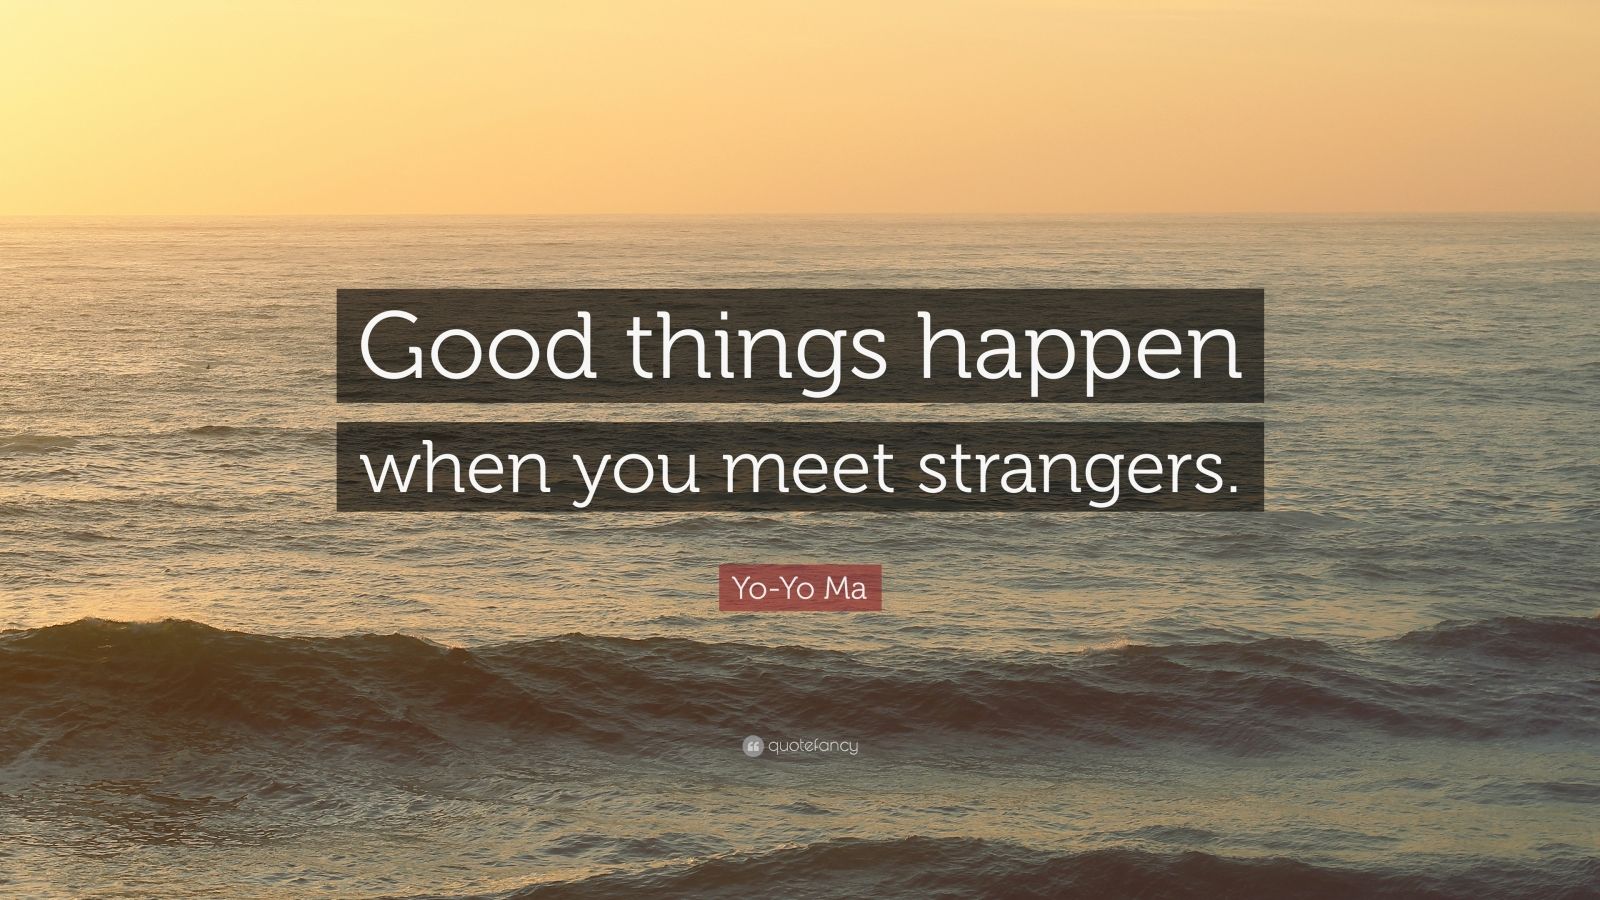 Yo-Yo Ma Quote: "Good things happen when you meet strangers." (7 wallpapers) - Quotefancy